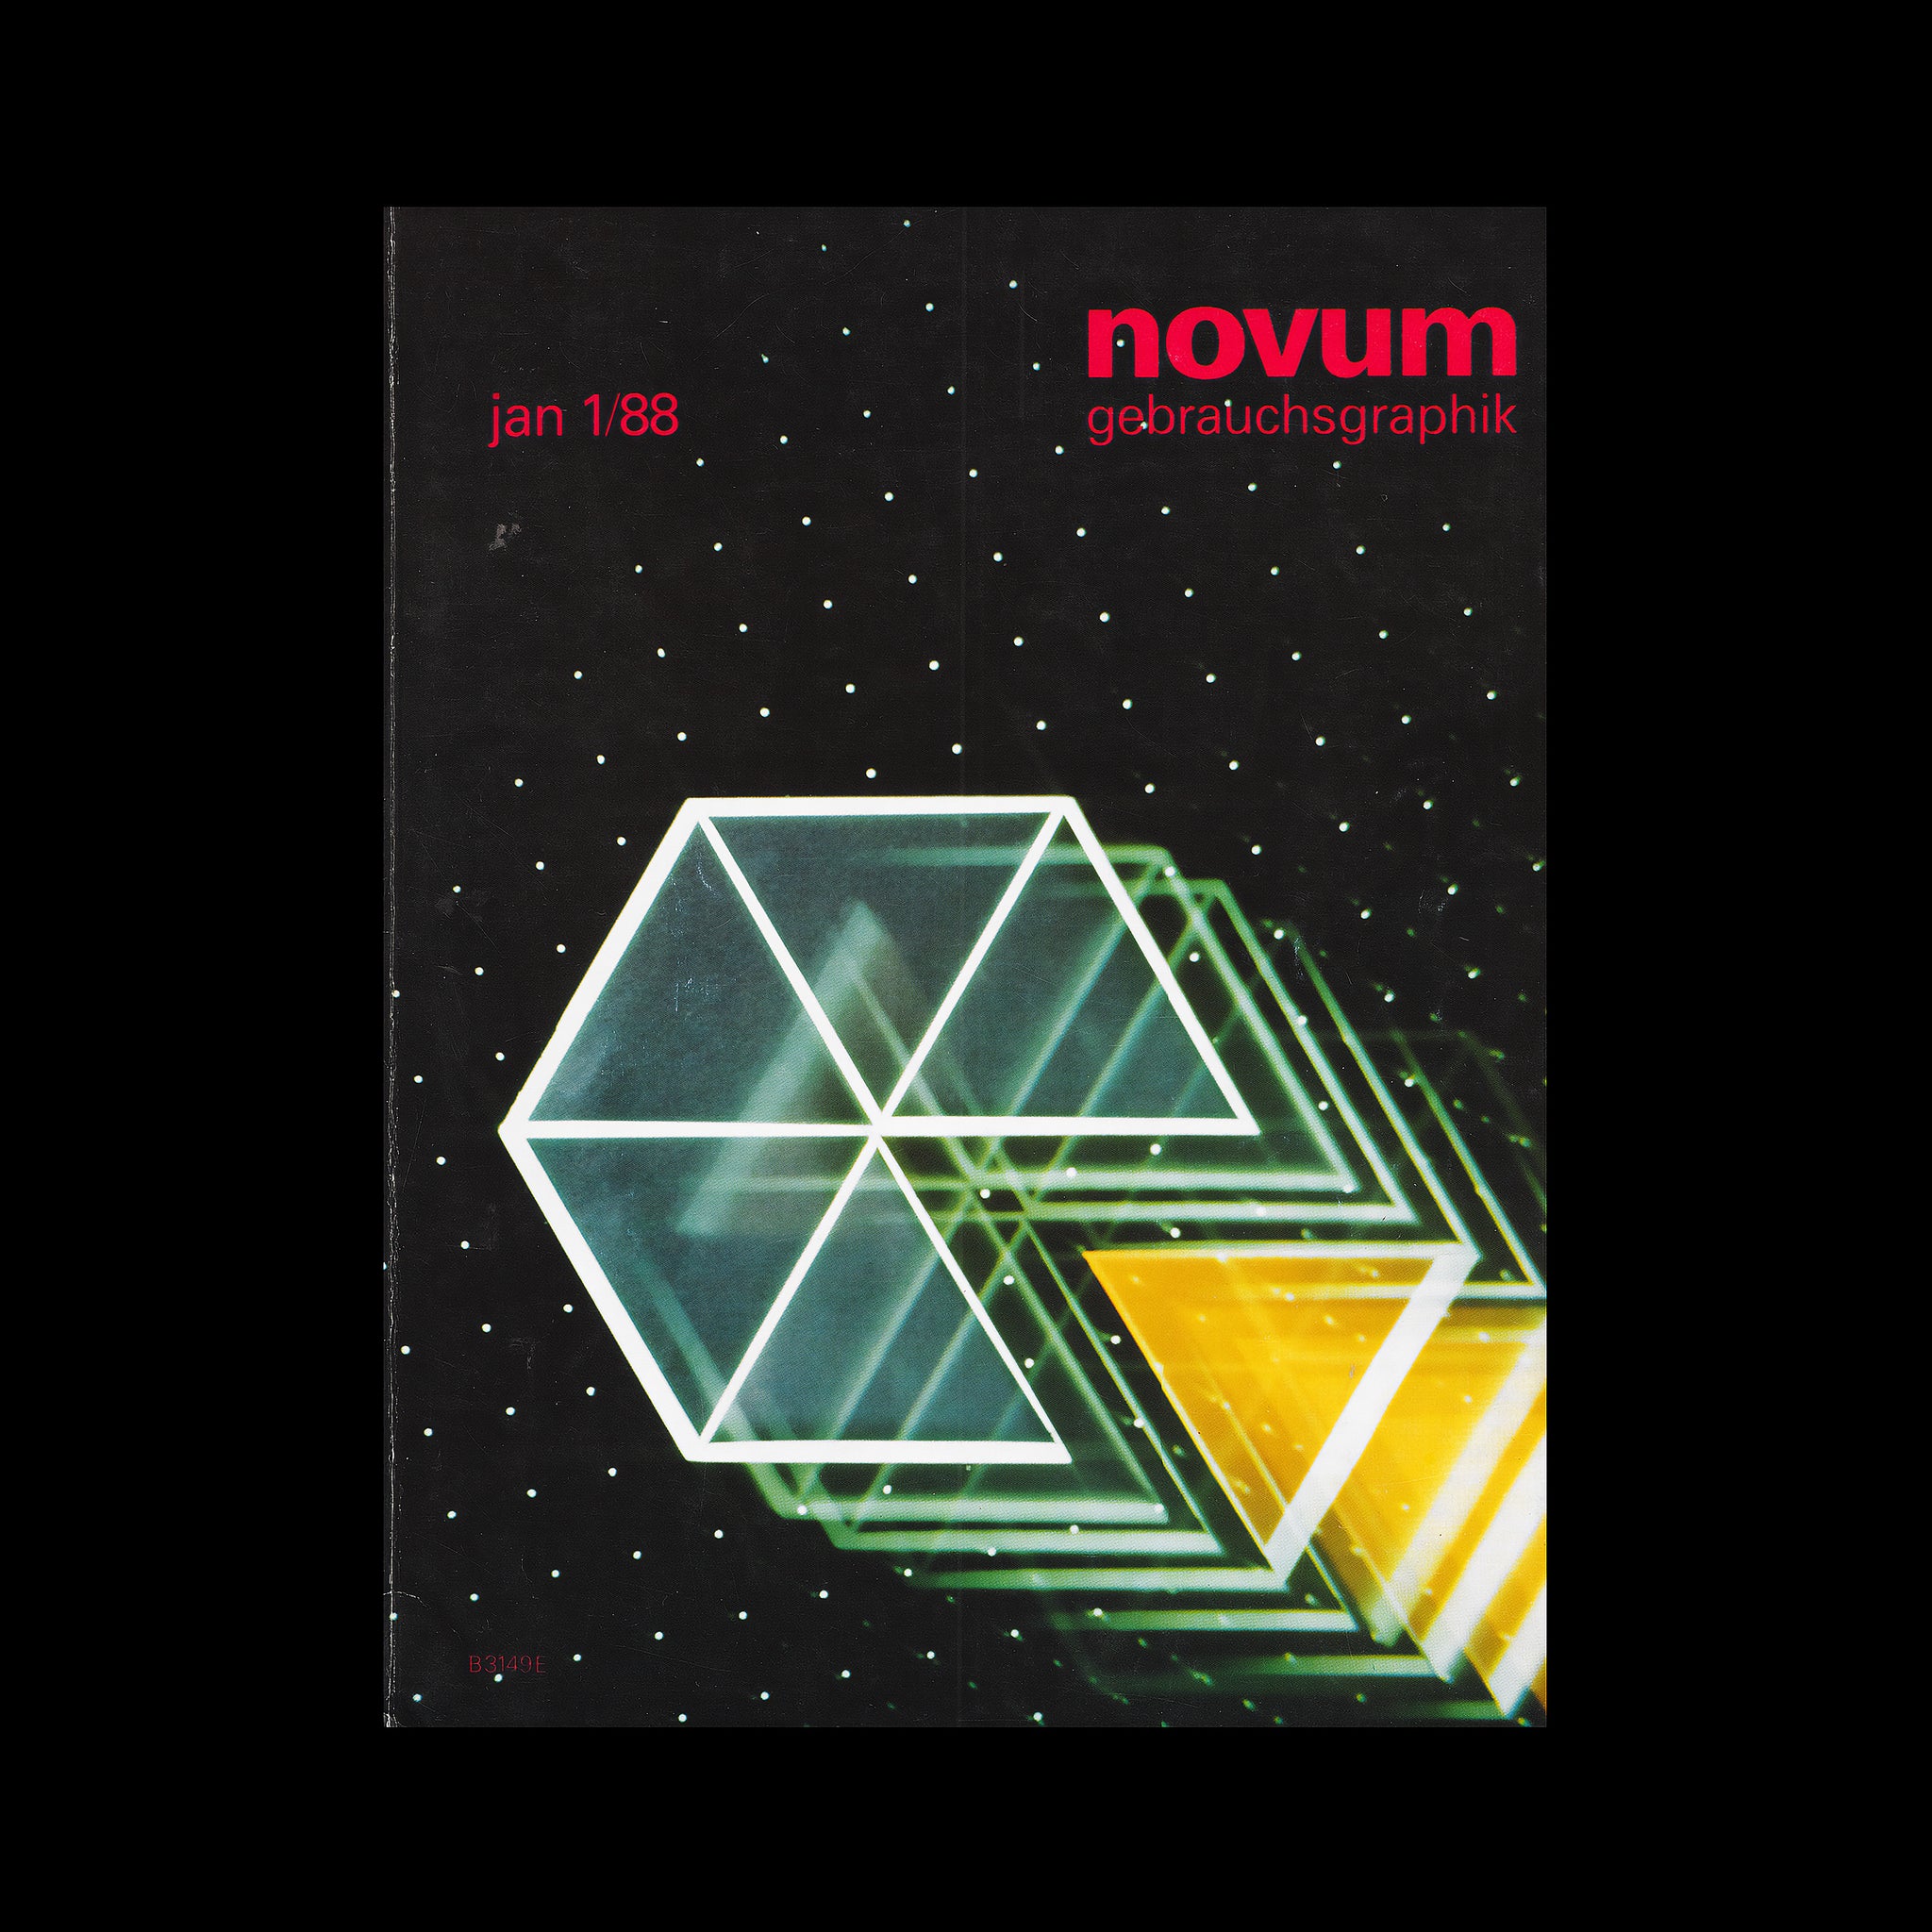 Novum Gebrauchsgraphik, January 1988